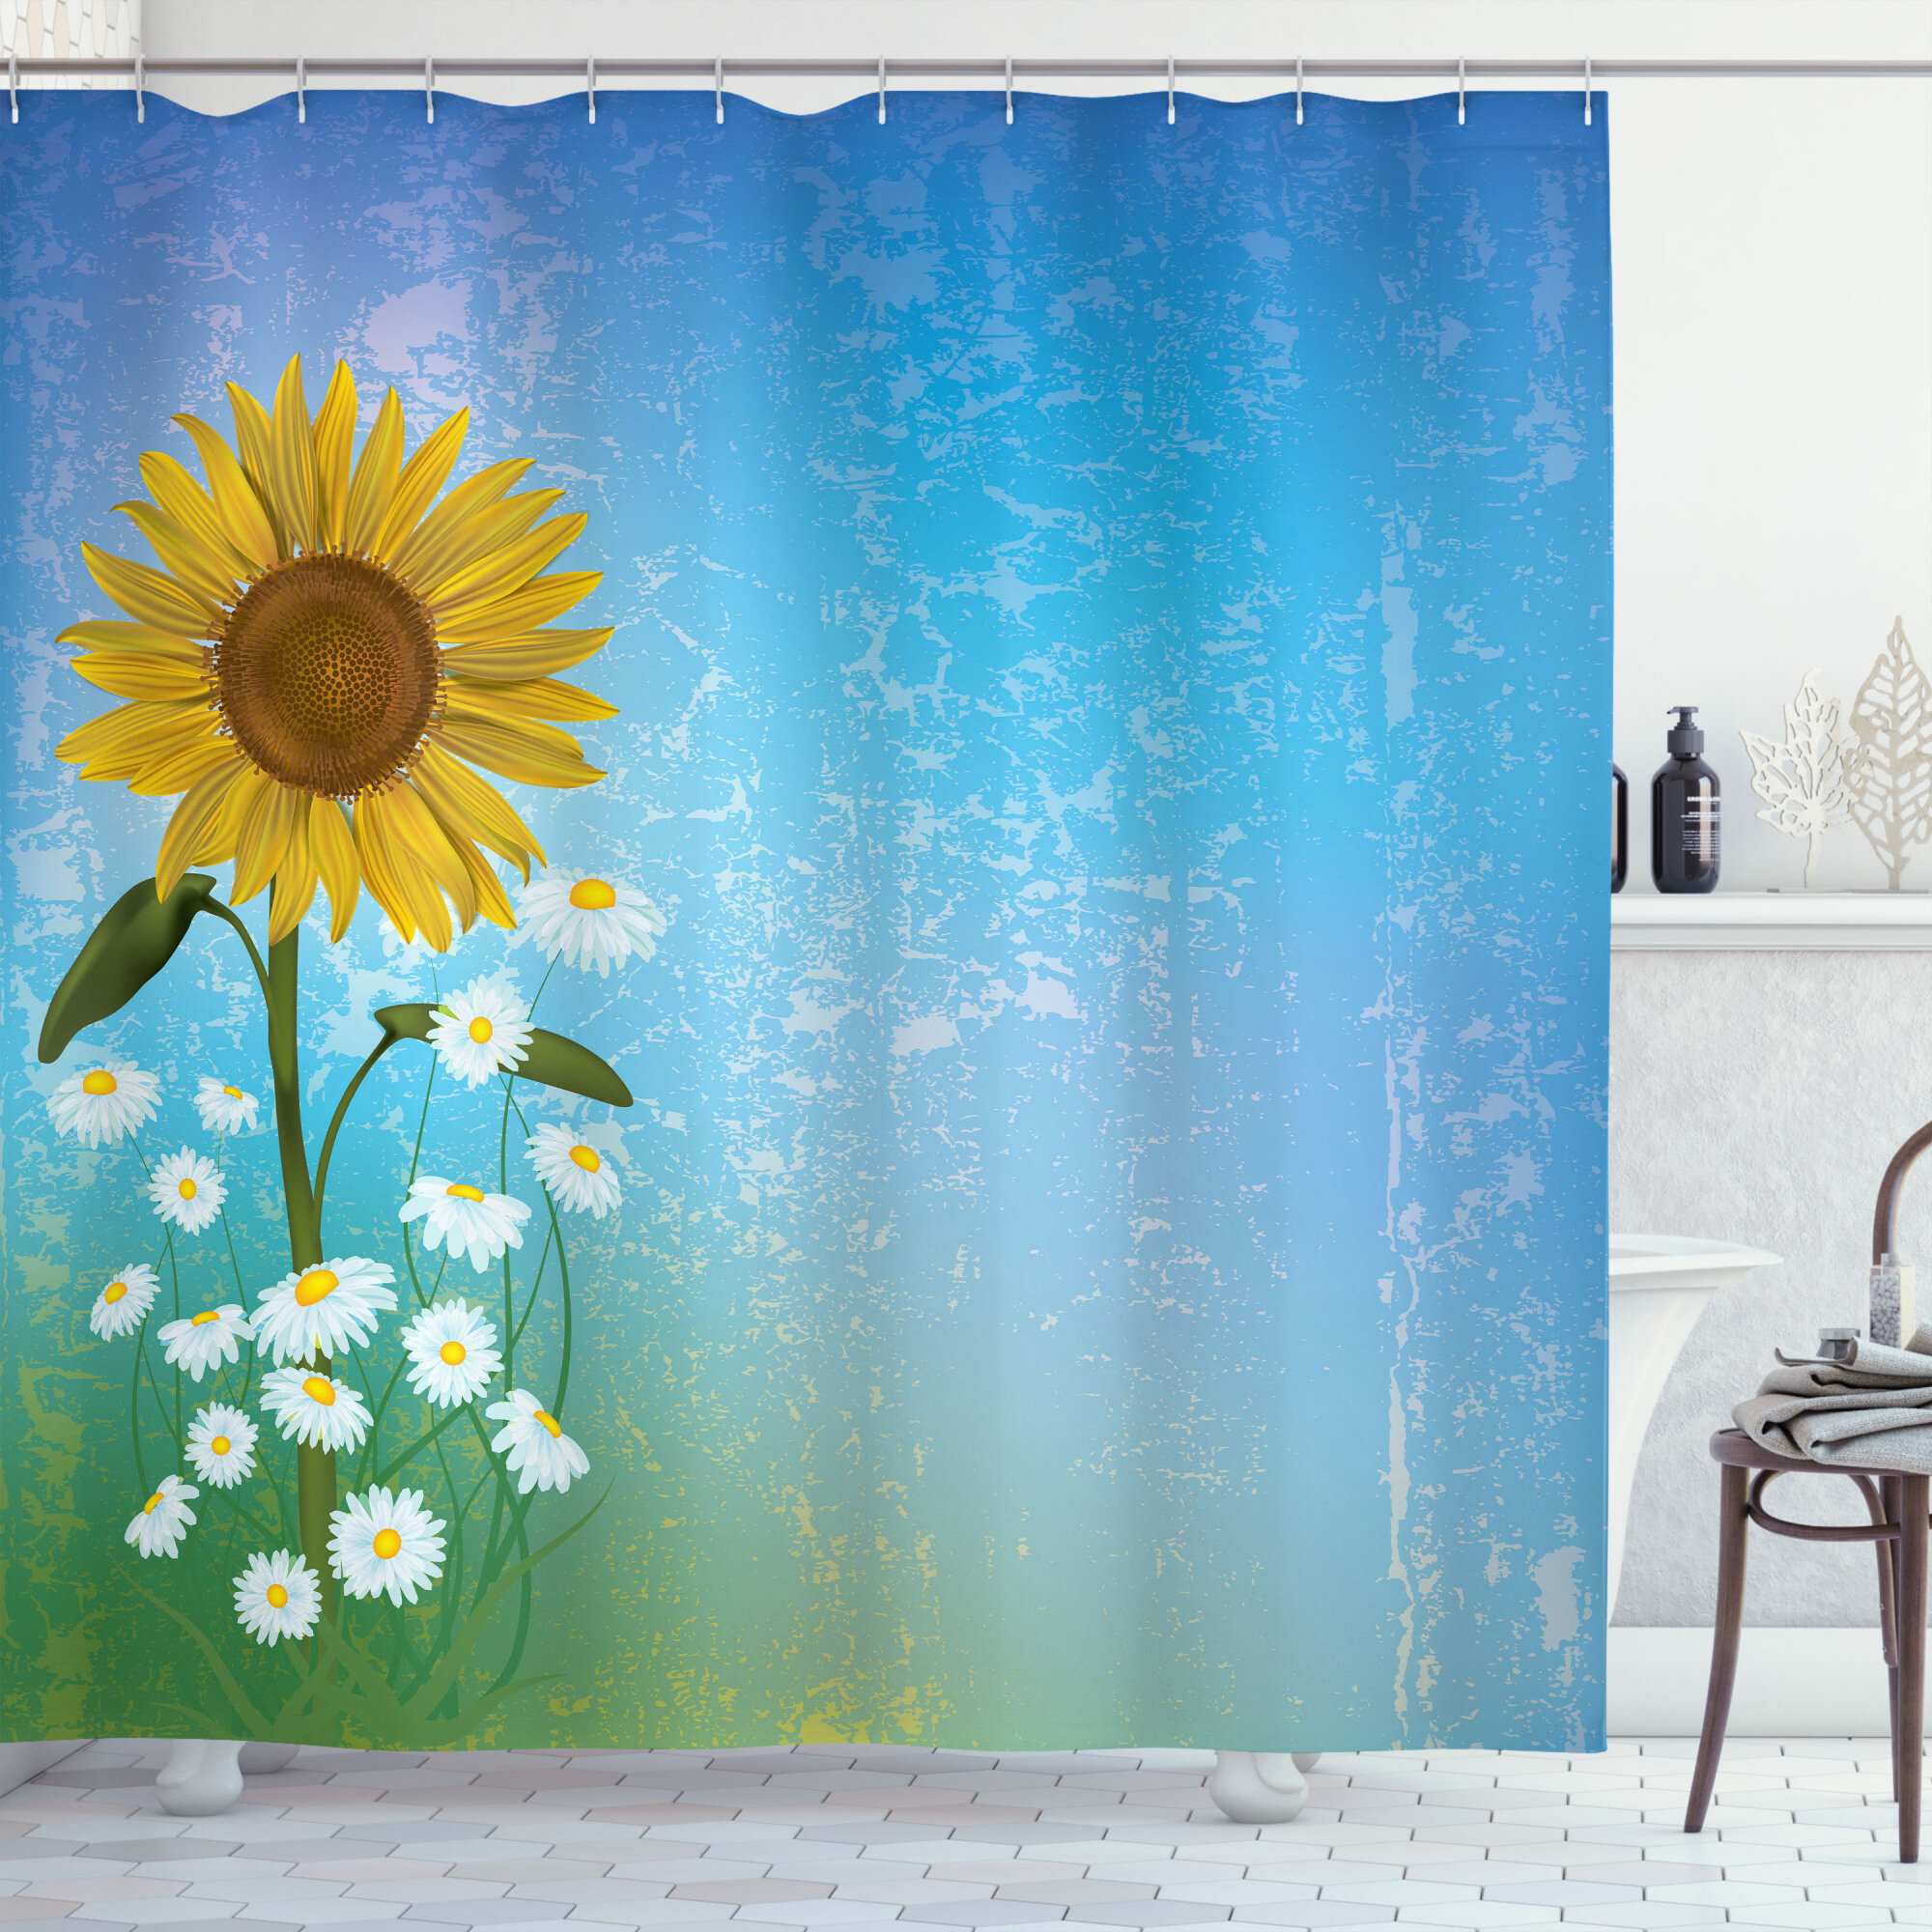 Sunflower Shower Curtain Set + Hooks East Urban Home Size: 84 H x 69 W